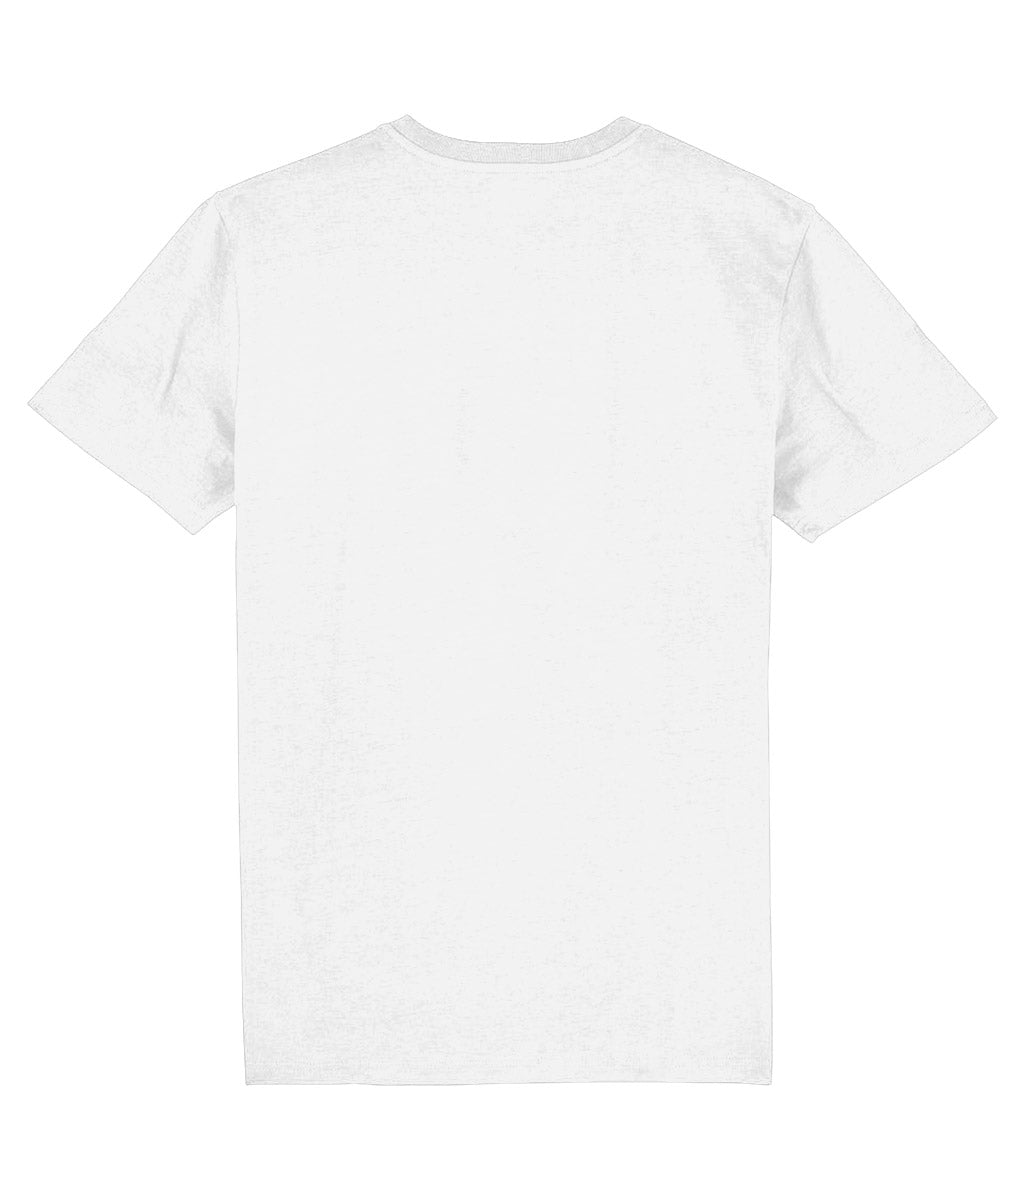 Sherlock Bones "I Won A Car In LA" Artwork T-Shirt (White)